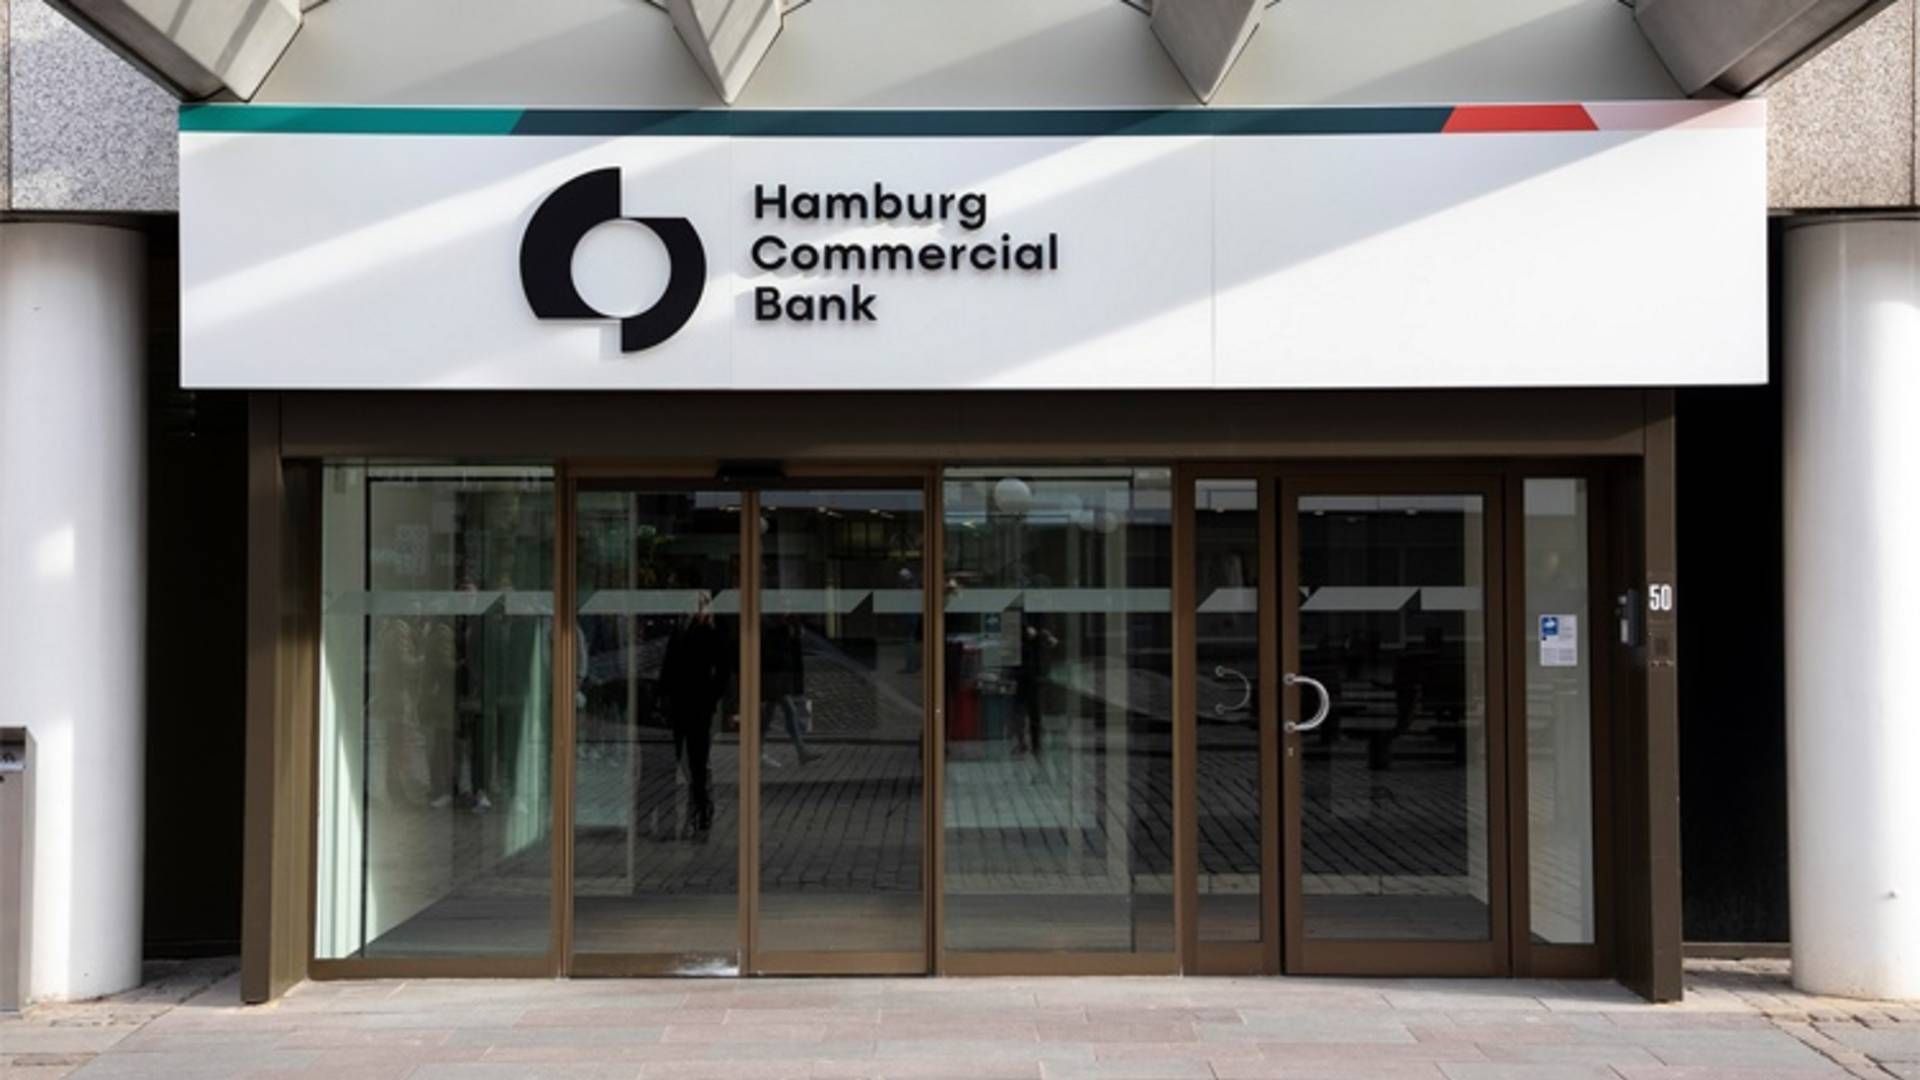 Foto: PR / Hamburg Commercial Bank